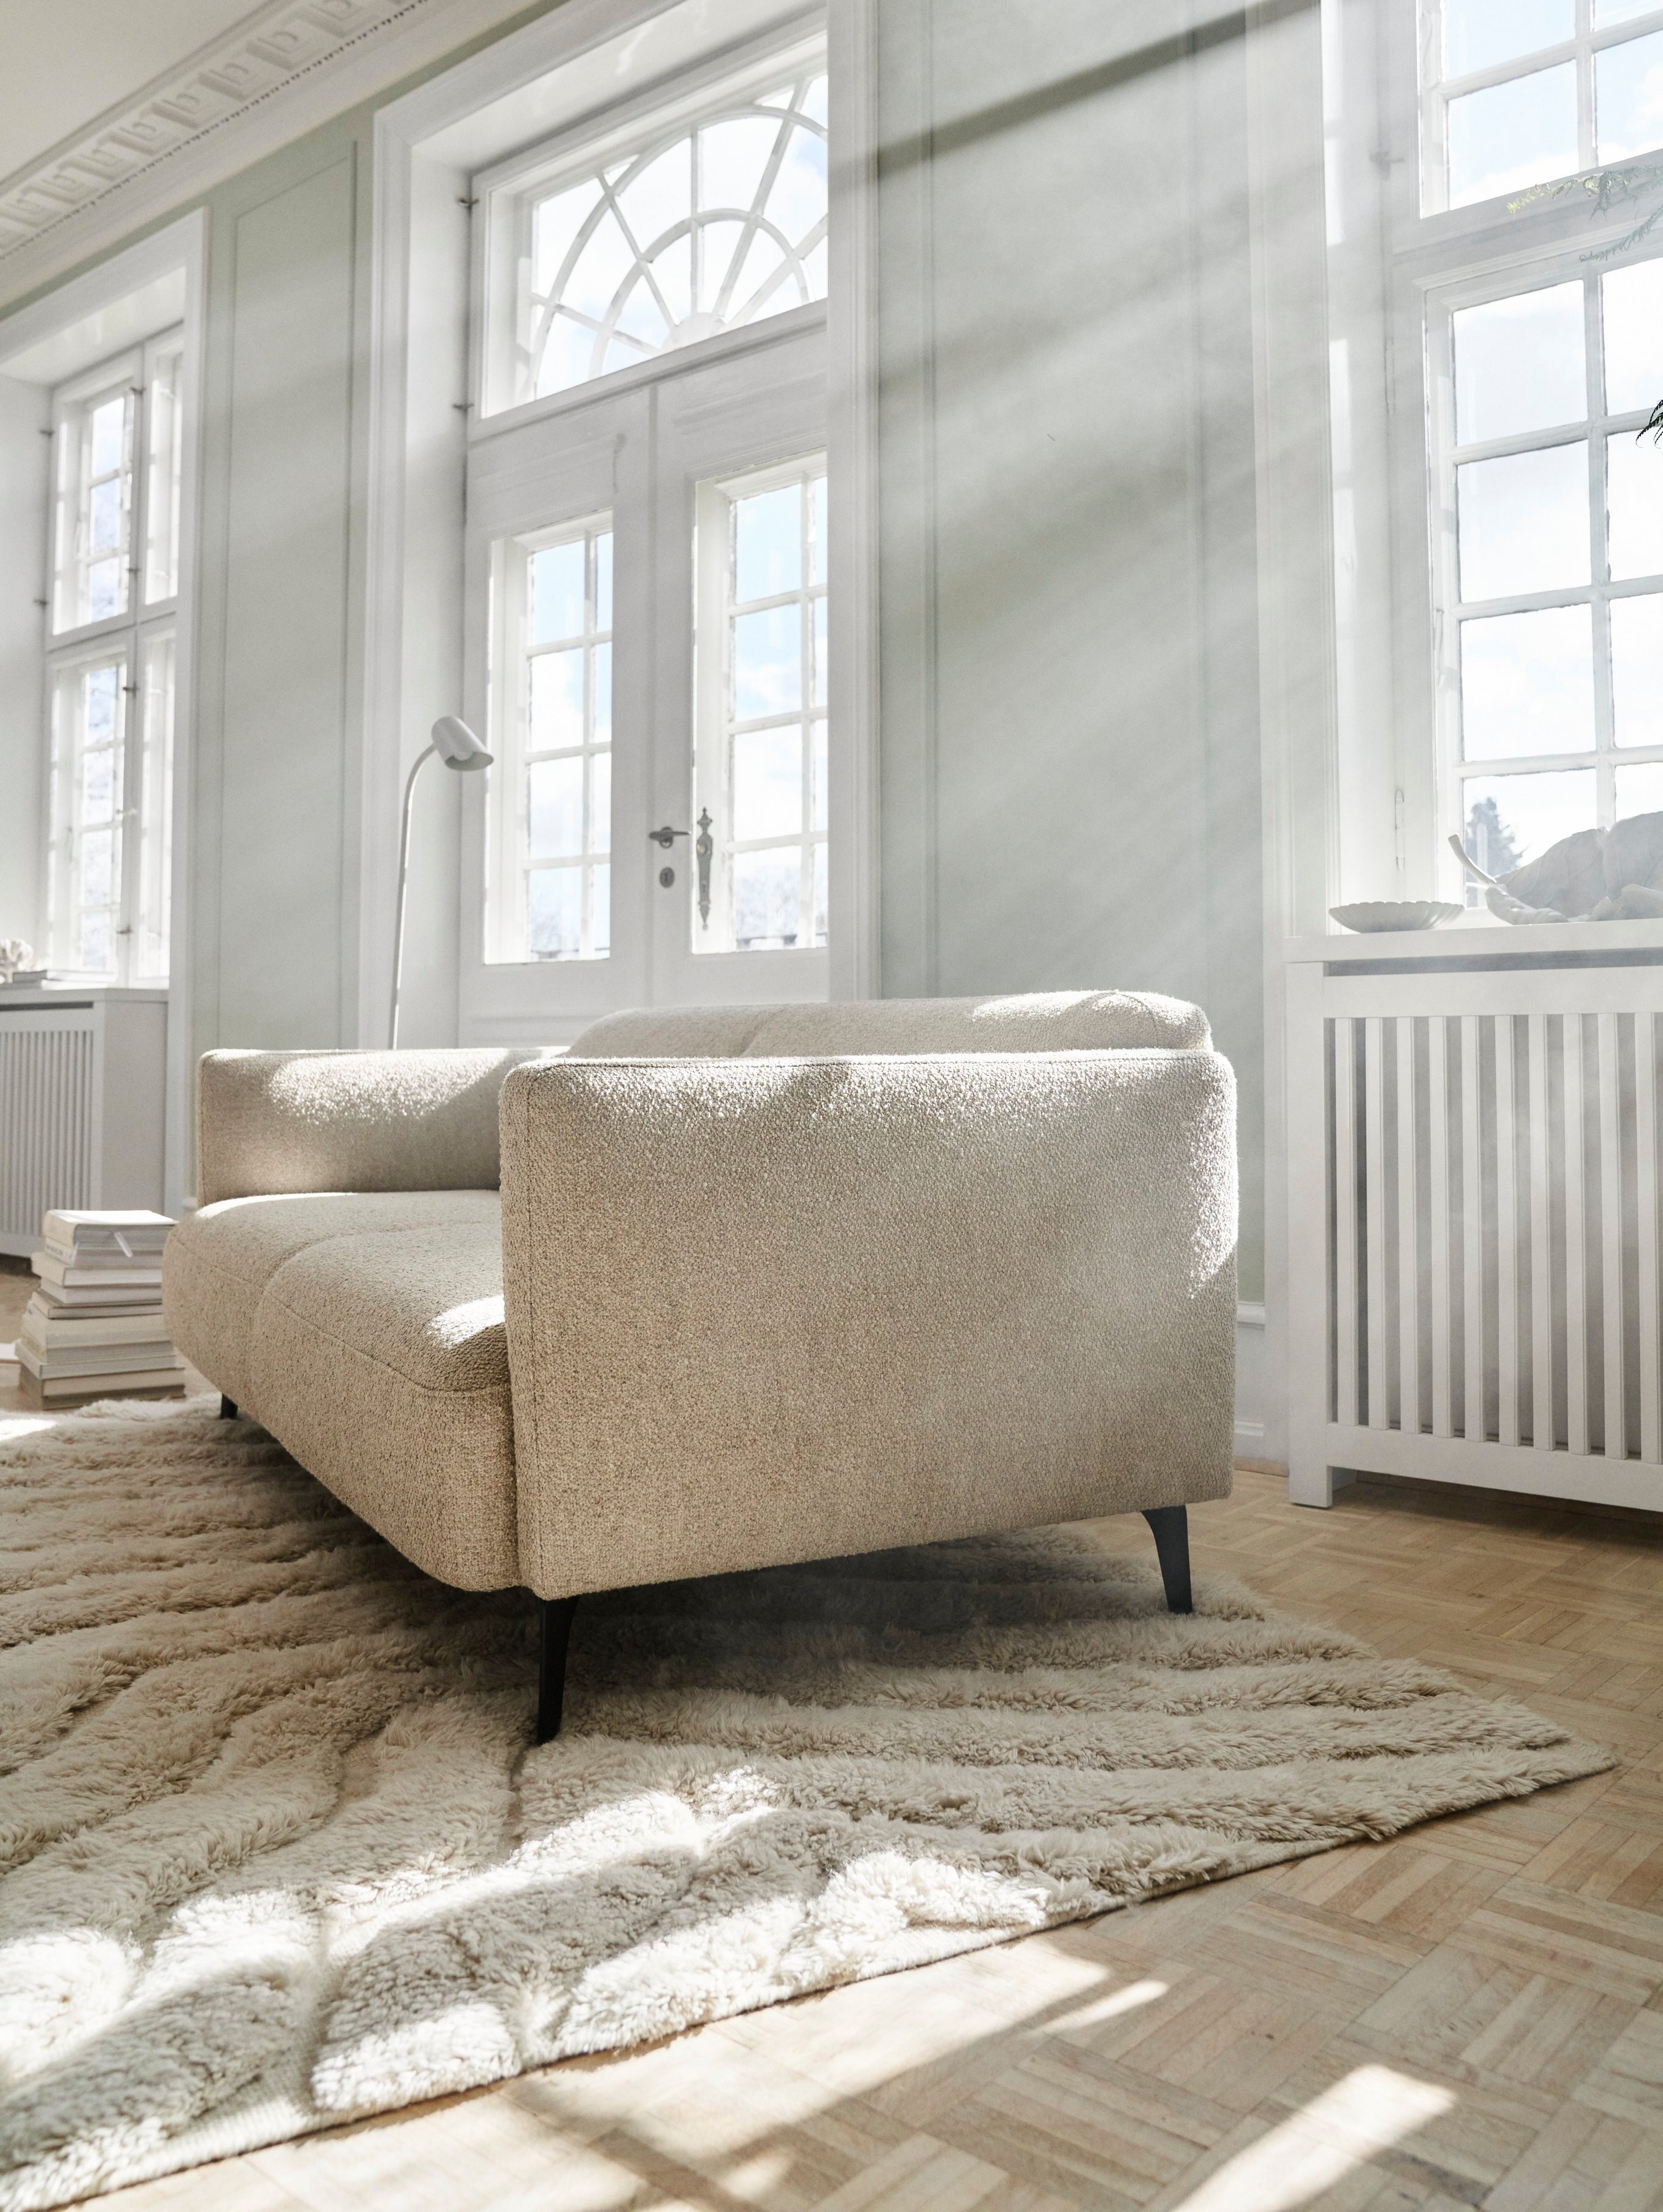 Modena sofa in a nice sunlit Scandinavia- inspired room.